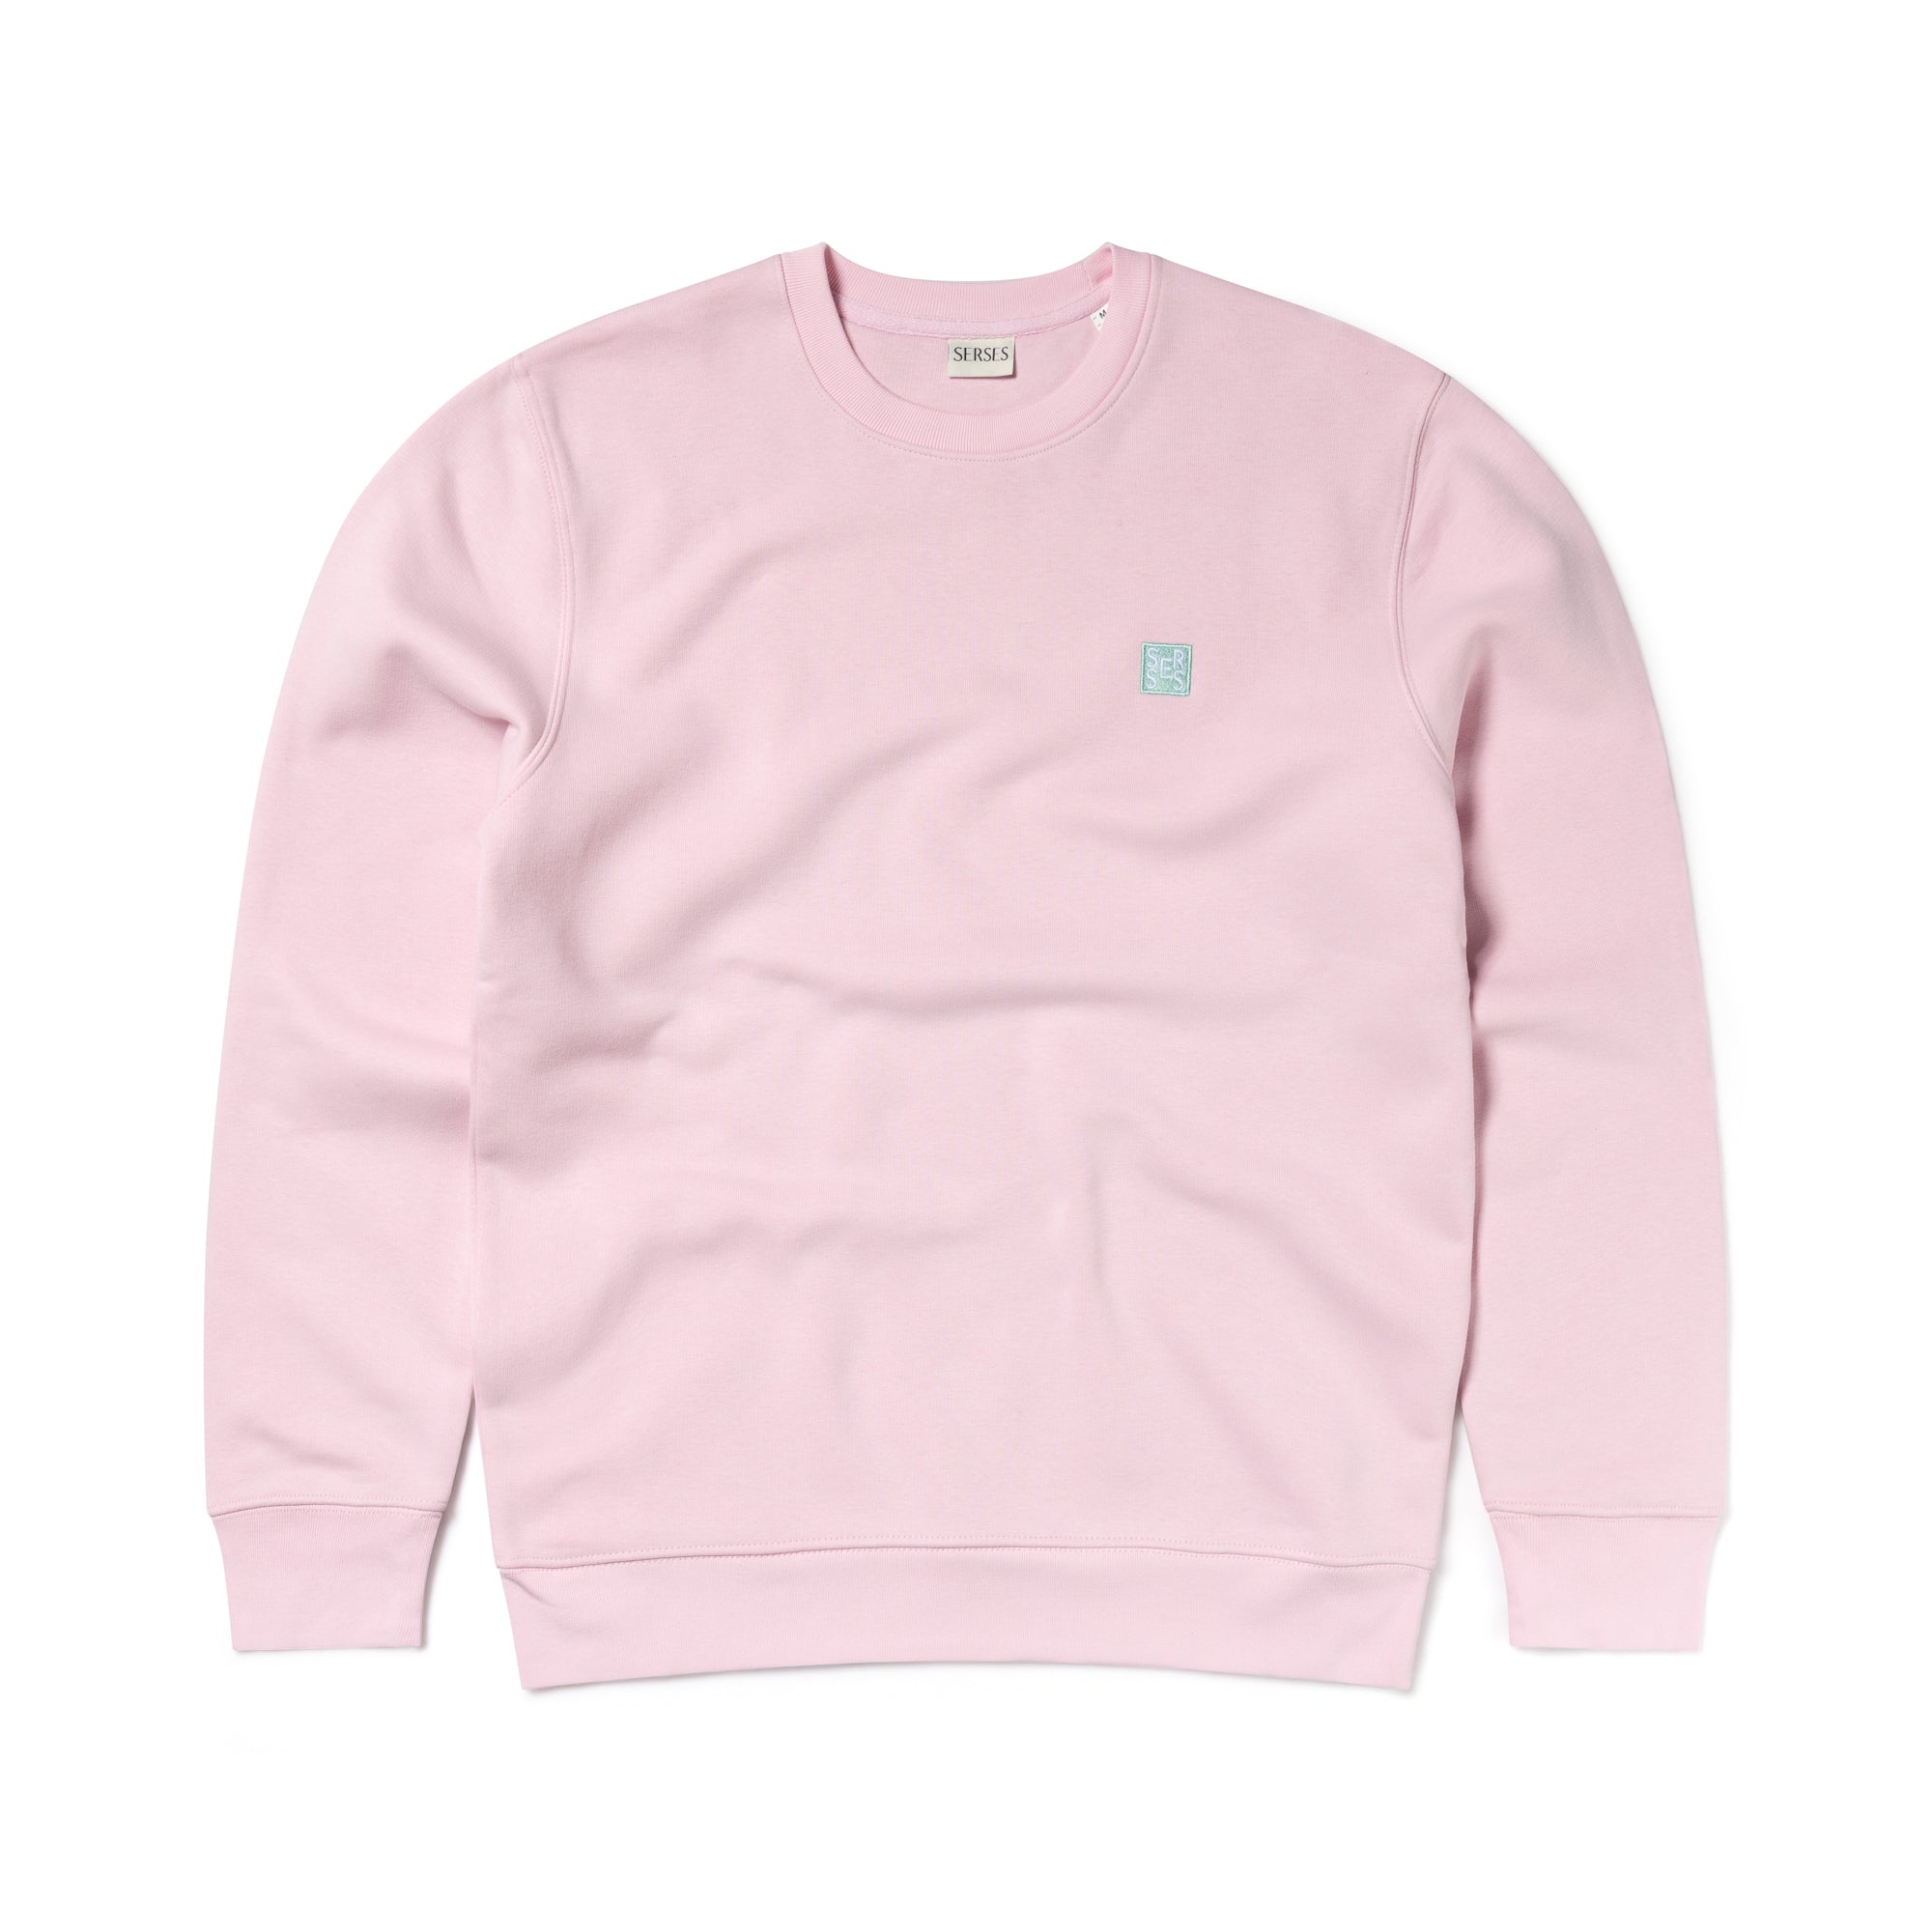 Monogram Organic Sweatshirt in Pale Pink